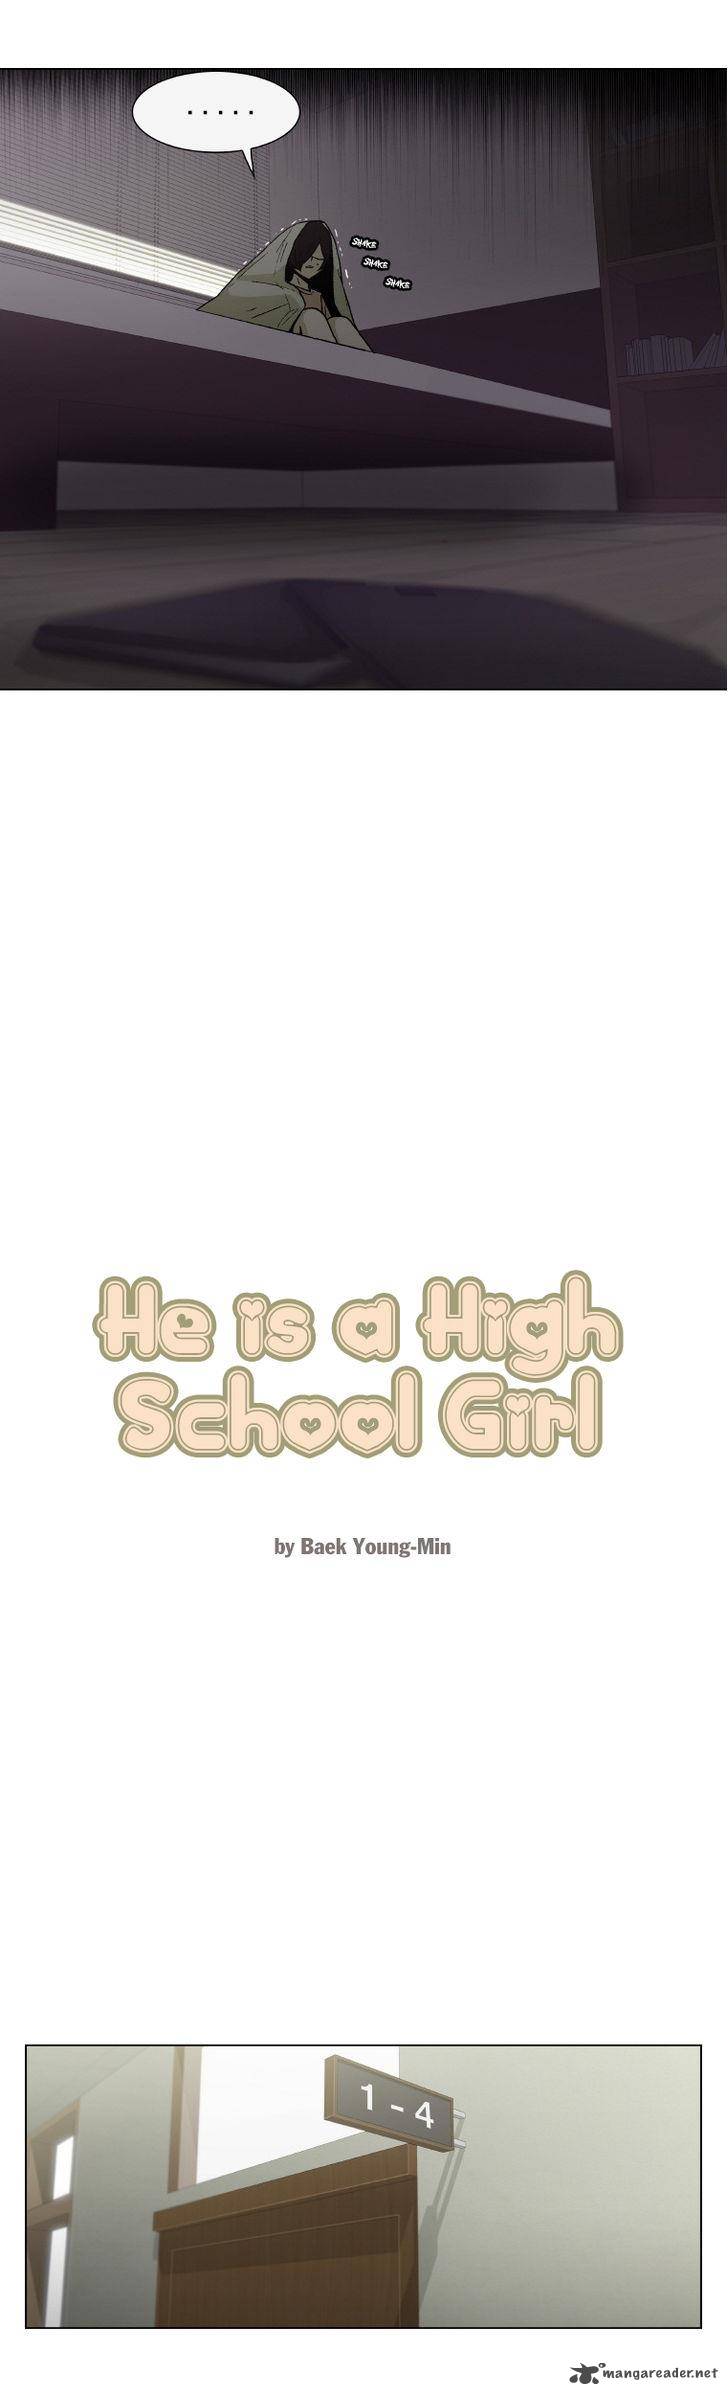 He Is A High School Girl 11 5